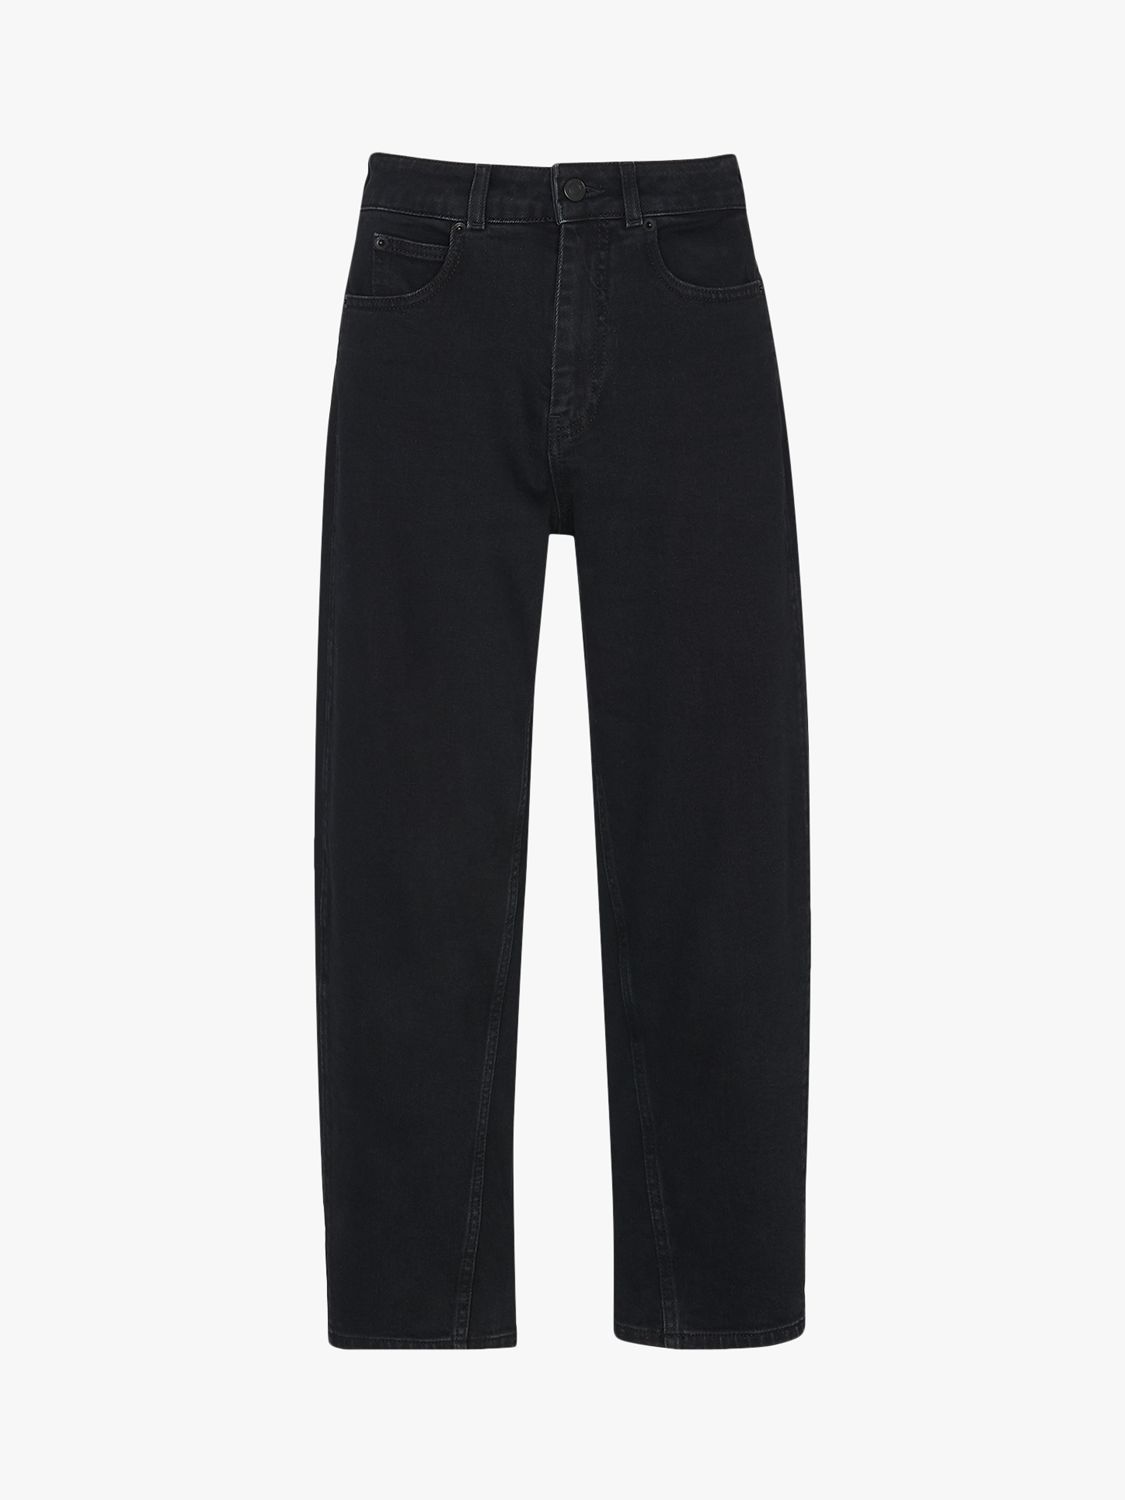 Whistles Organic Ankle Grazer Jeans, Black at John Lewis & Partners